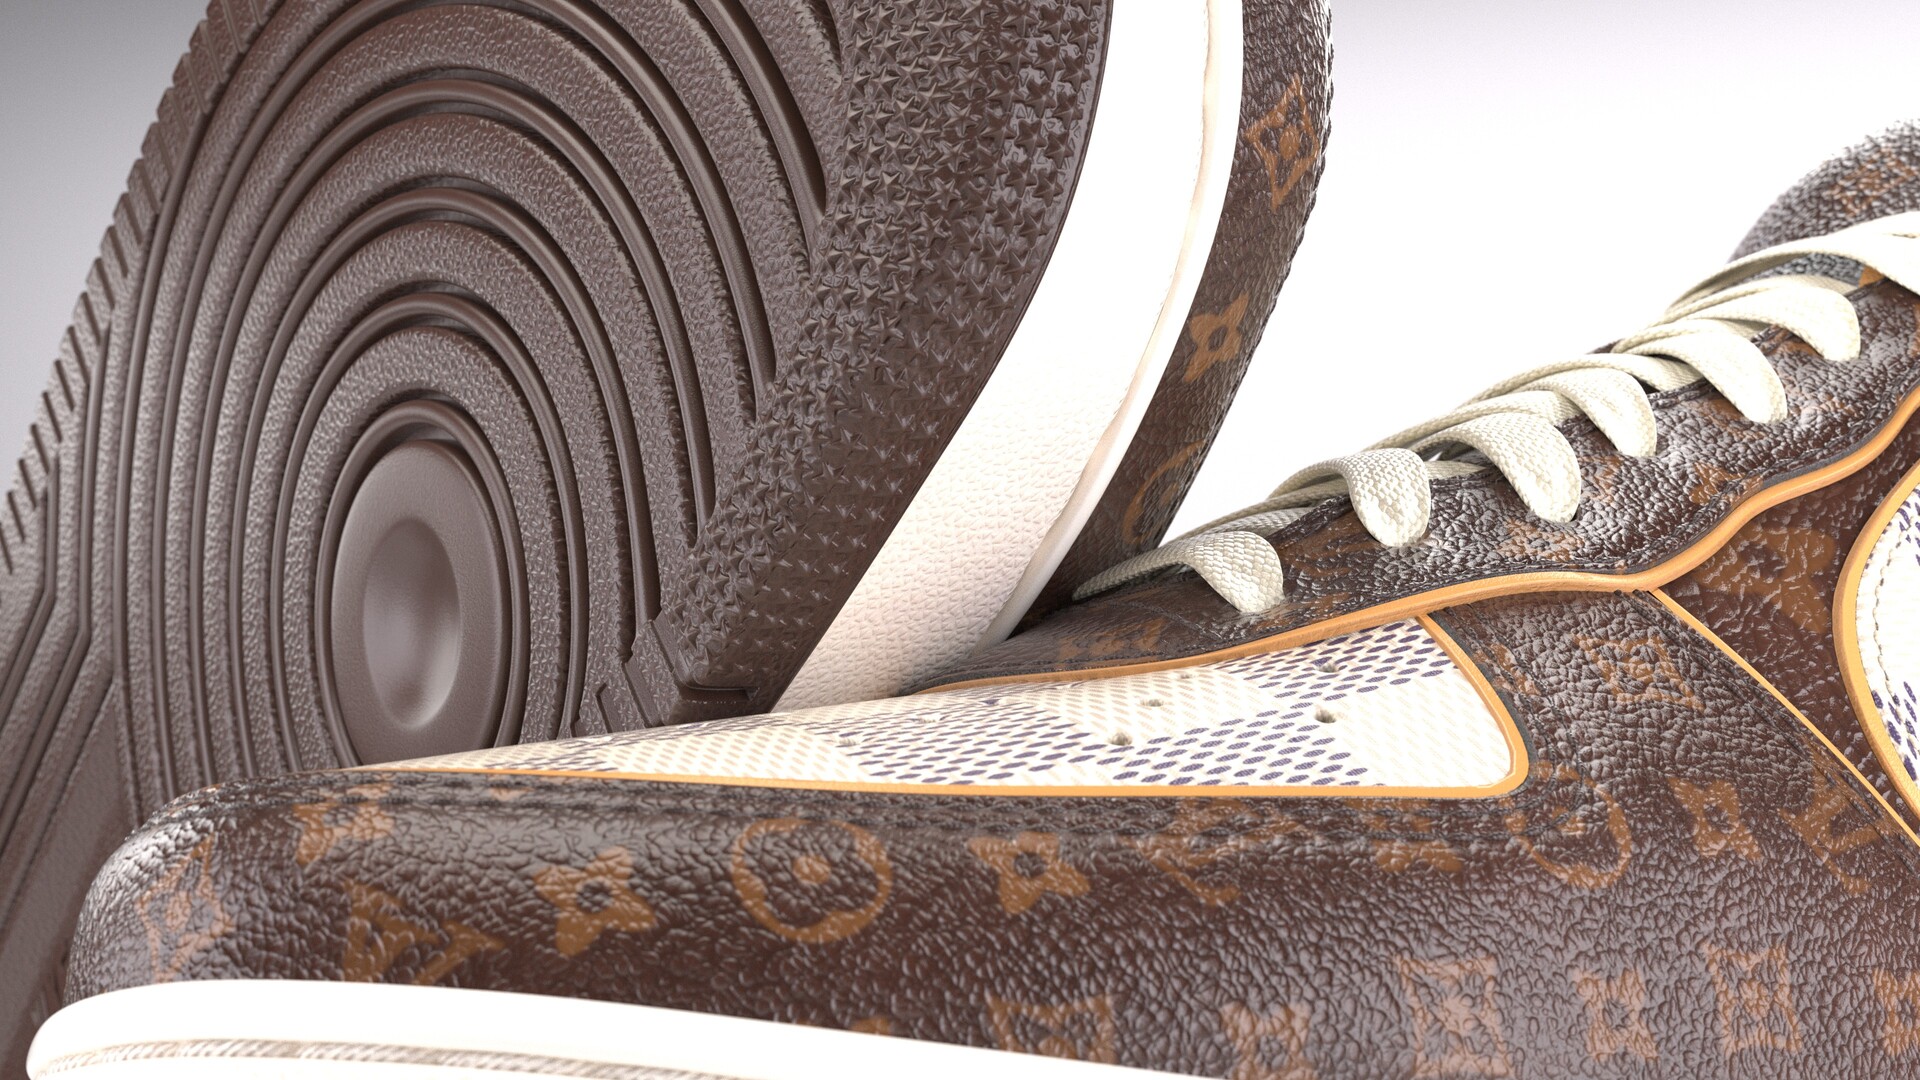 ArtStation - Louis Vuitton x Nike Air Jordan 1 Retro High footwear shoes  streetwear character clothing